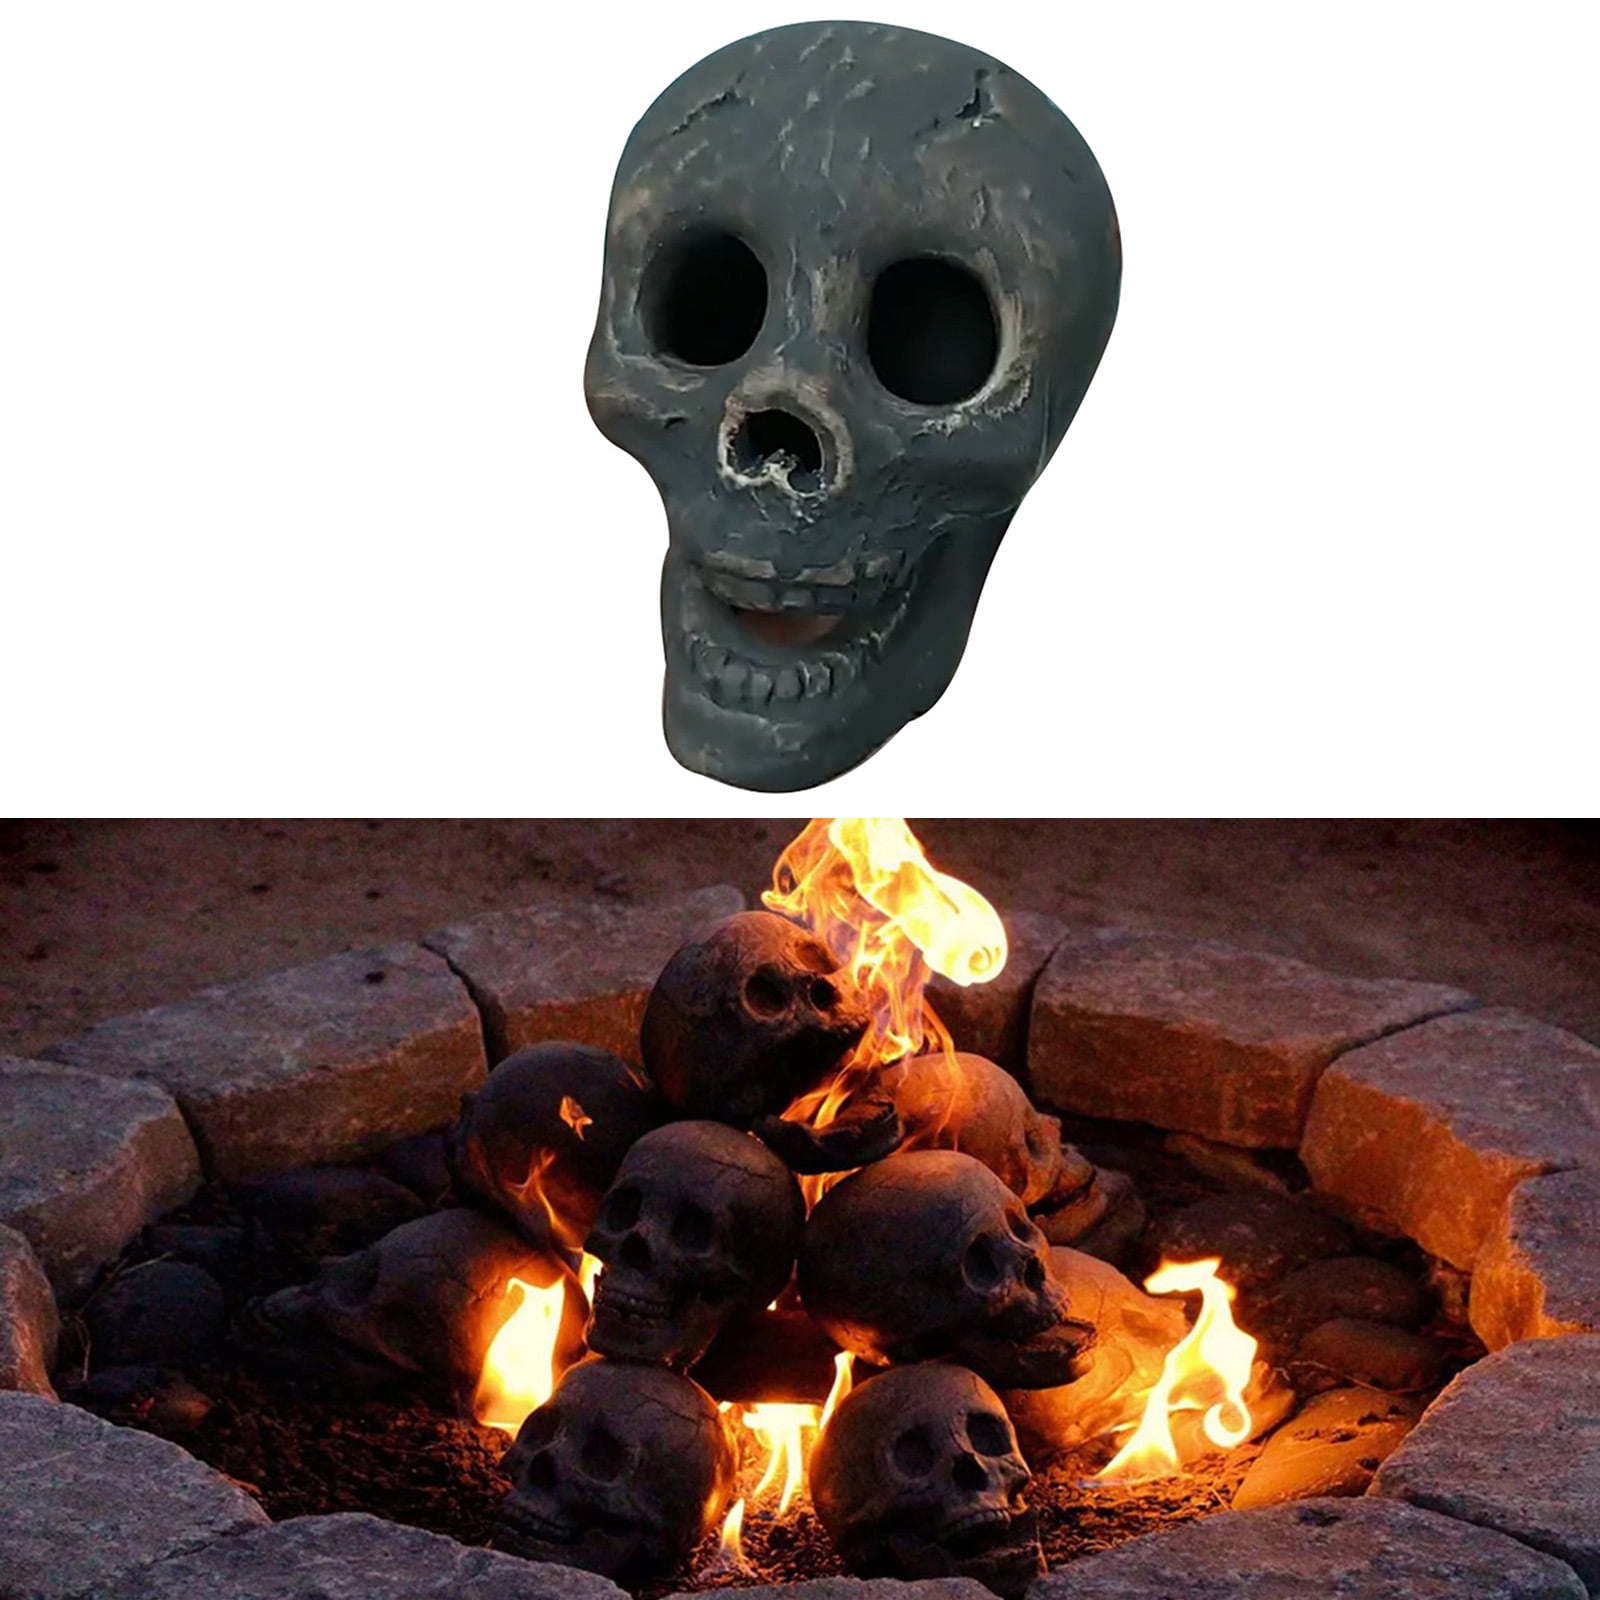 Morefun Ceramic Imitation Human Skull, Human Skull Fire Pit Logs